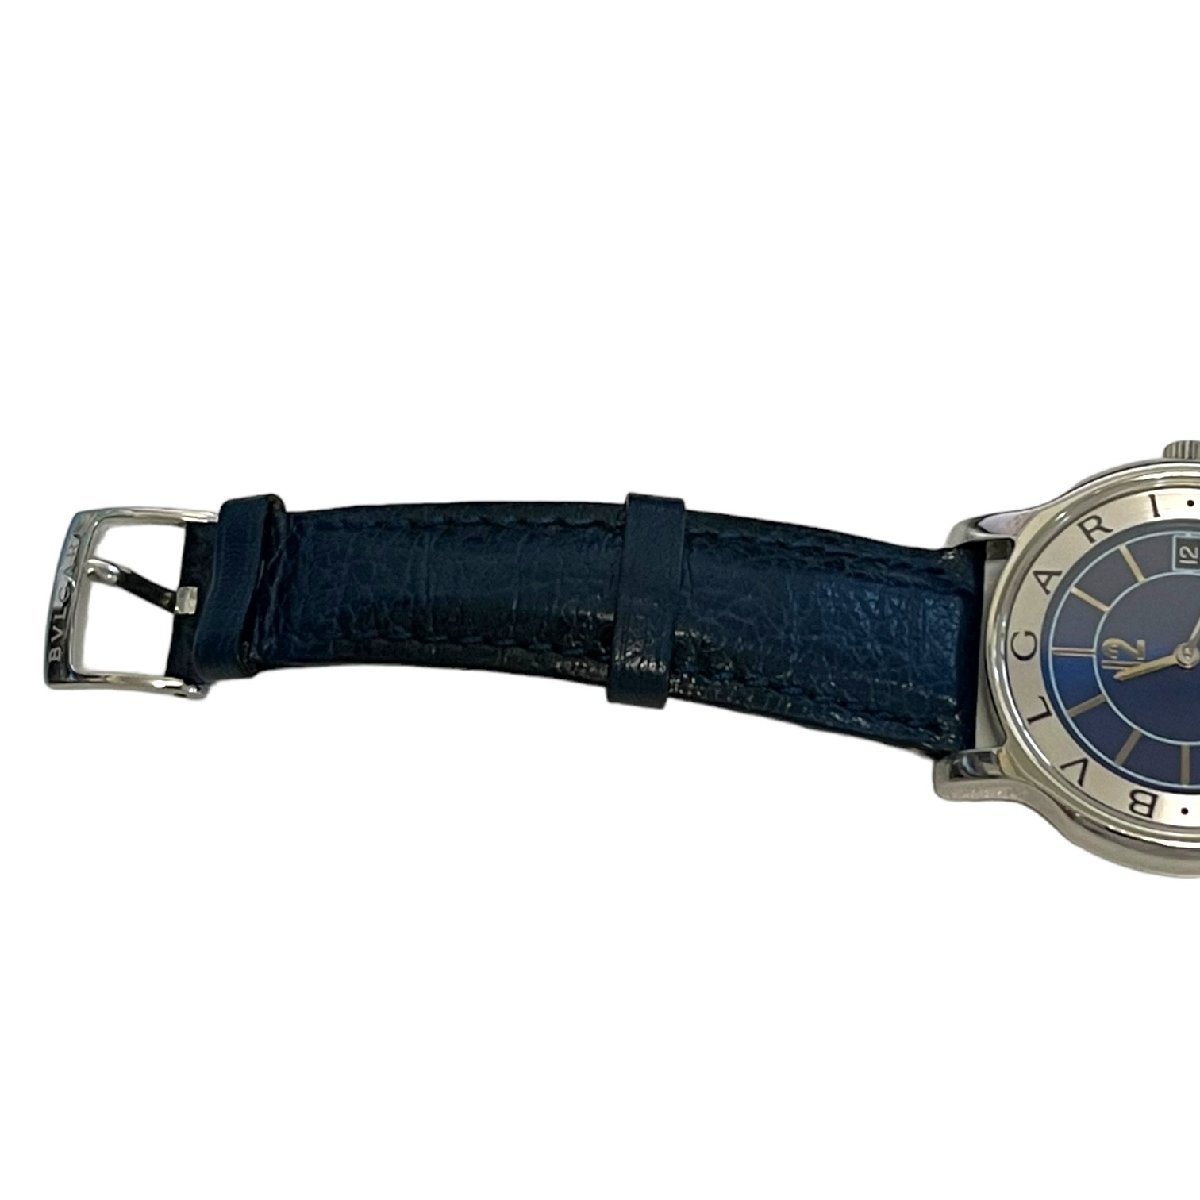 [ б/у товар ] BVLGARI BVLGARY Solotempo ST35S Date синий циферблат кварц ремень оригинальный мужские наручные часы без коробки корпус только L48153RD